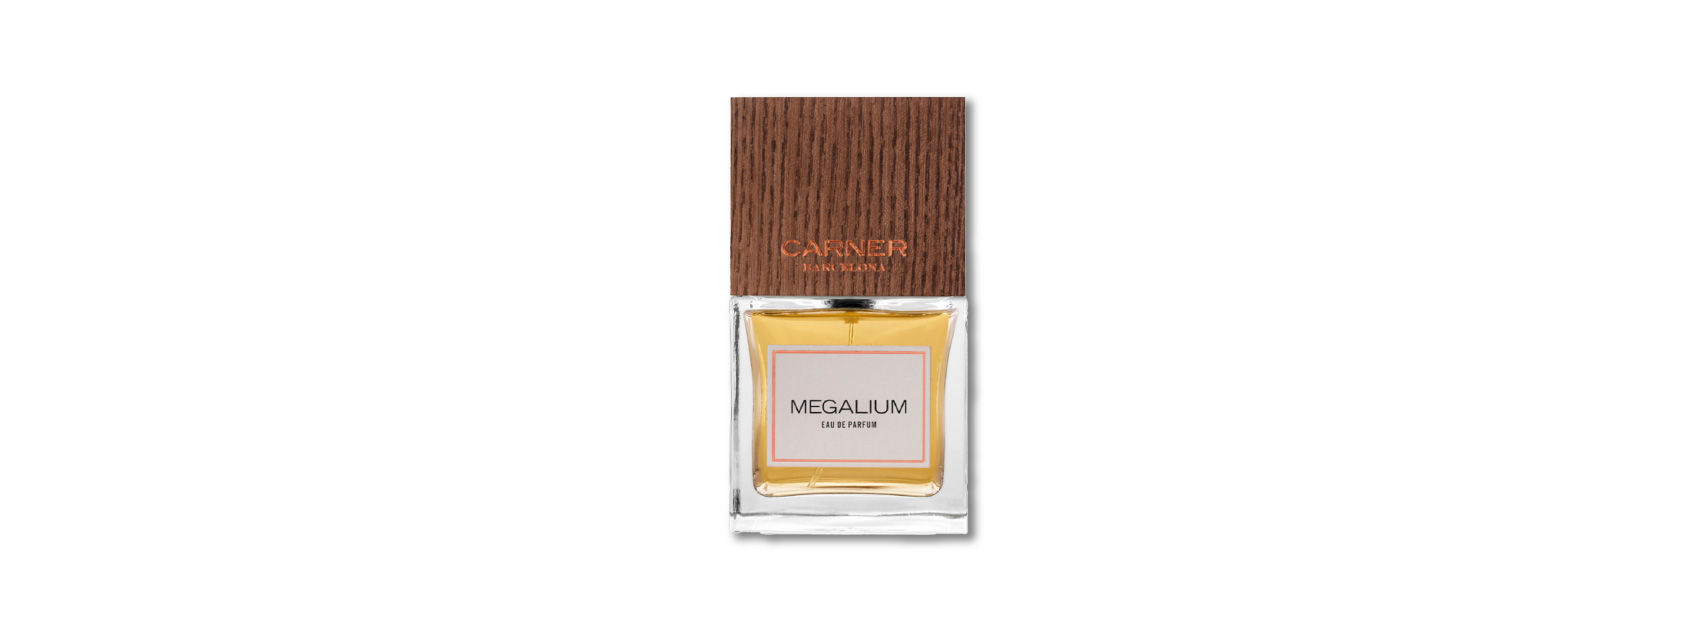 bottle of megalium perfume by carner barcelona